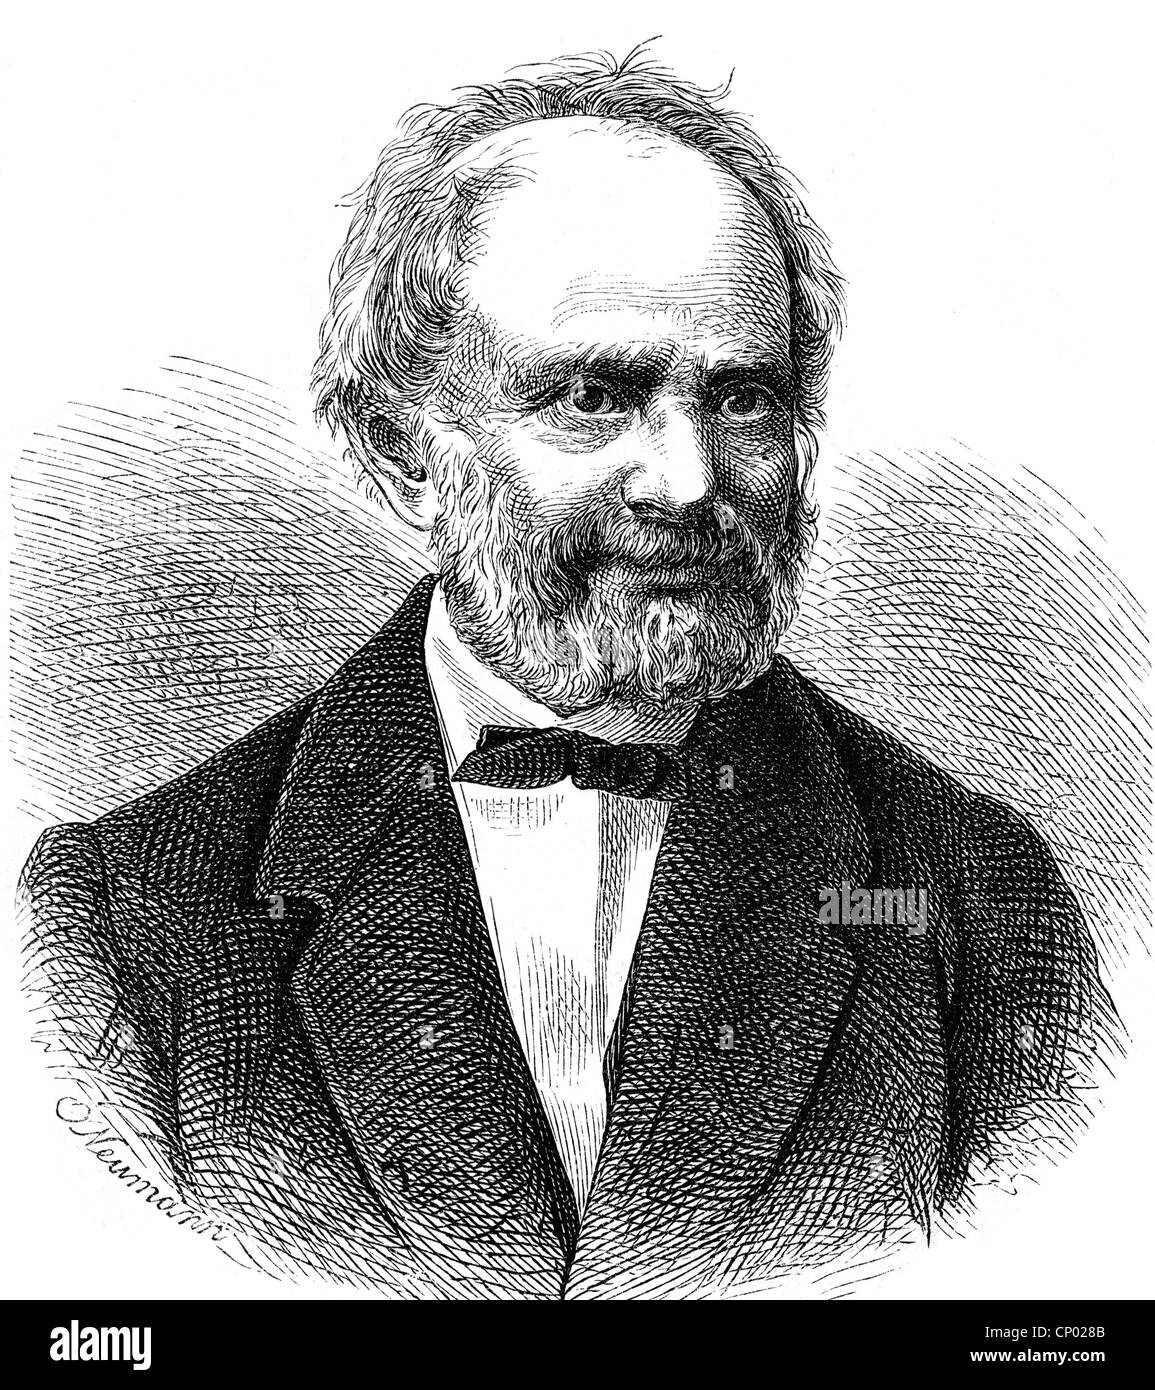 Weber, Wilhelm Eduard, 24.10.1804 - 23.6.1891, German physicist, professor in Goettingen 1831 - 1837, portrait, wood engraving, late 19th century, Stock Photo